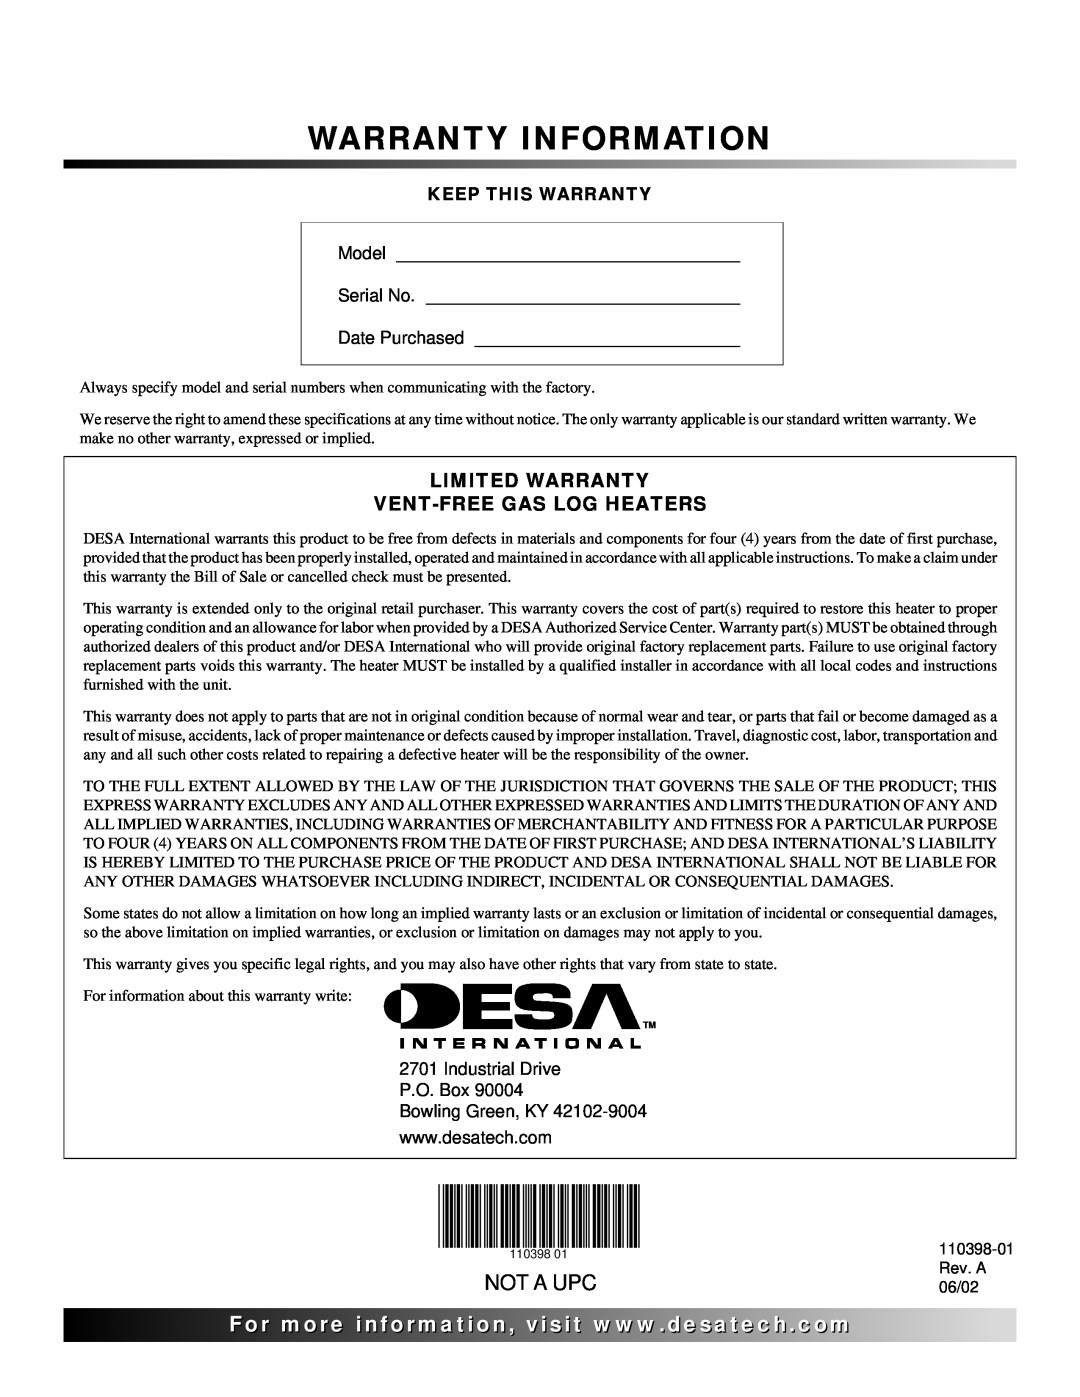 Desa VYM27NRPR installation manual Warranty Information, Not A Upc, For..com, Limited Warranty Vent-Free Gas Log Heaters 